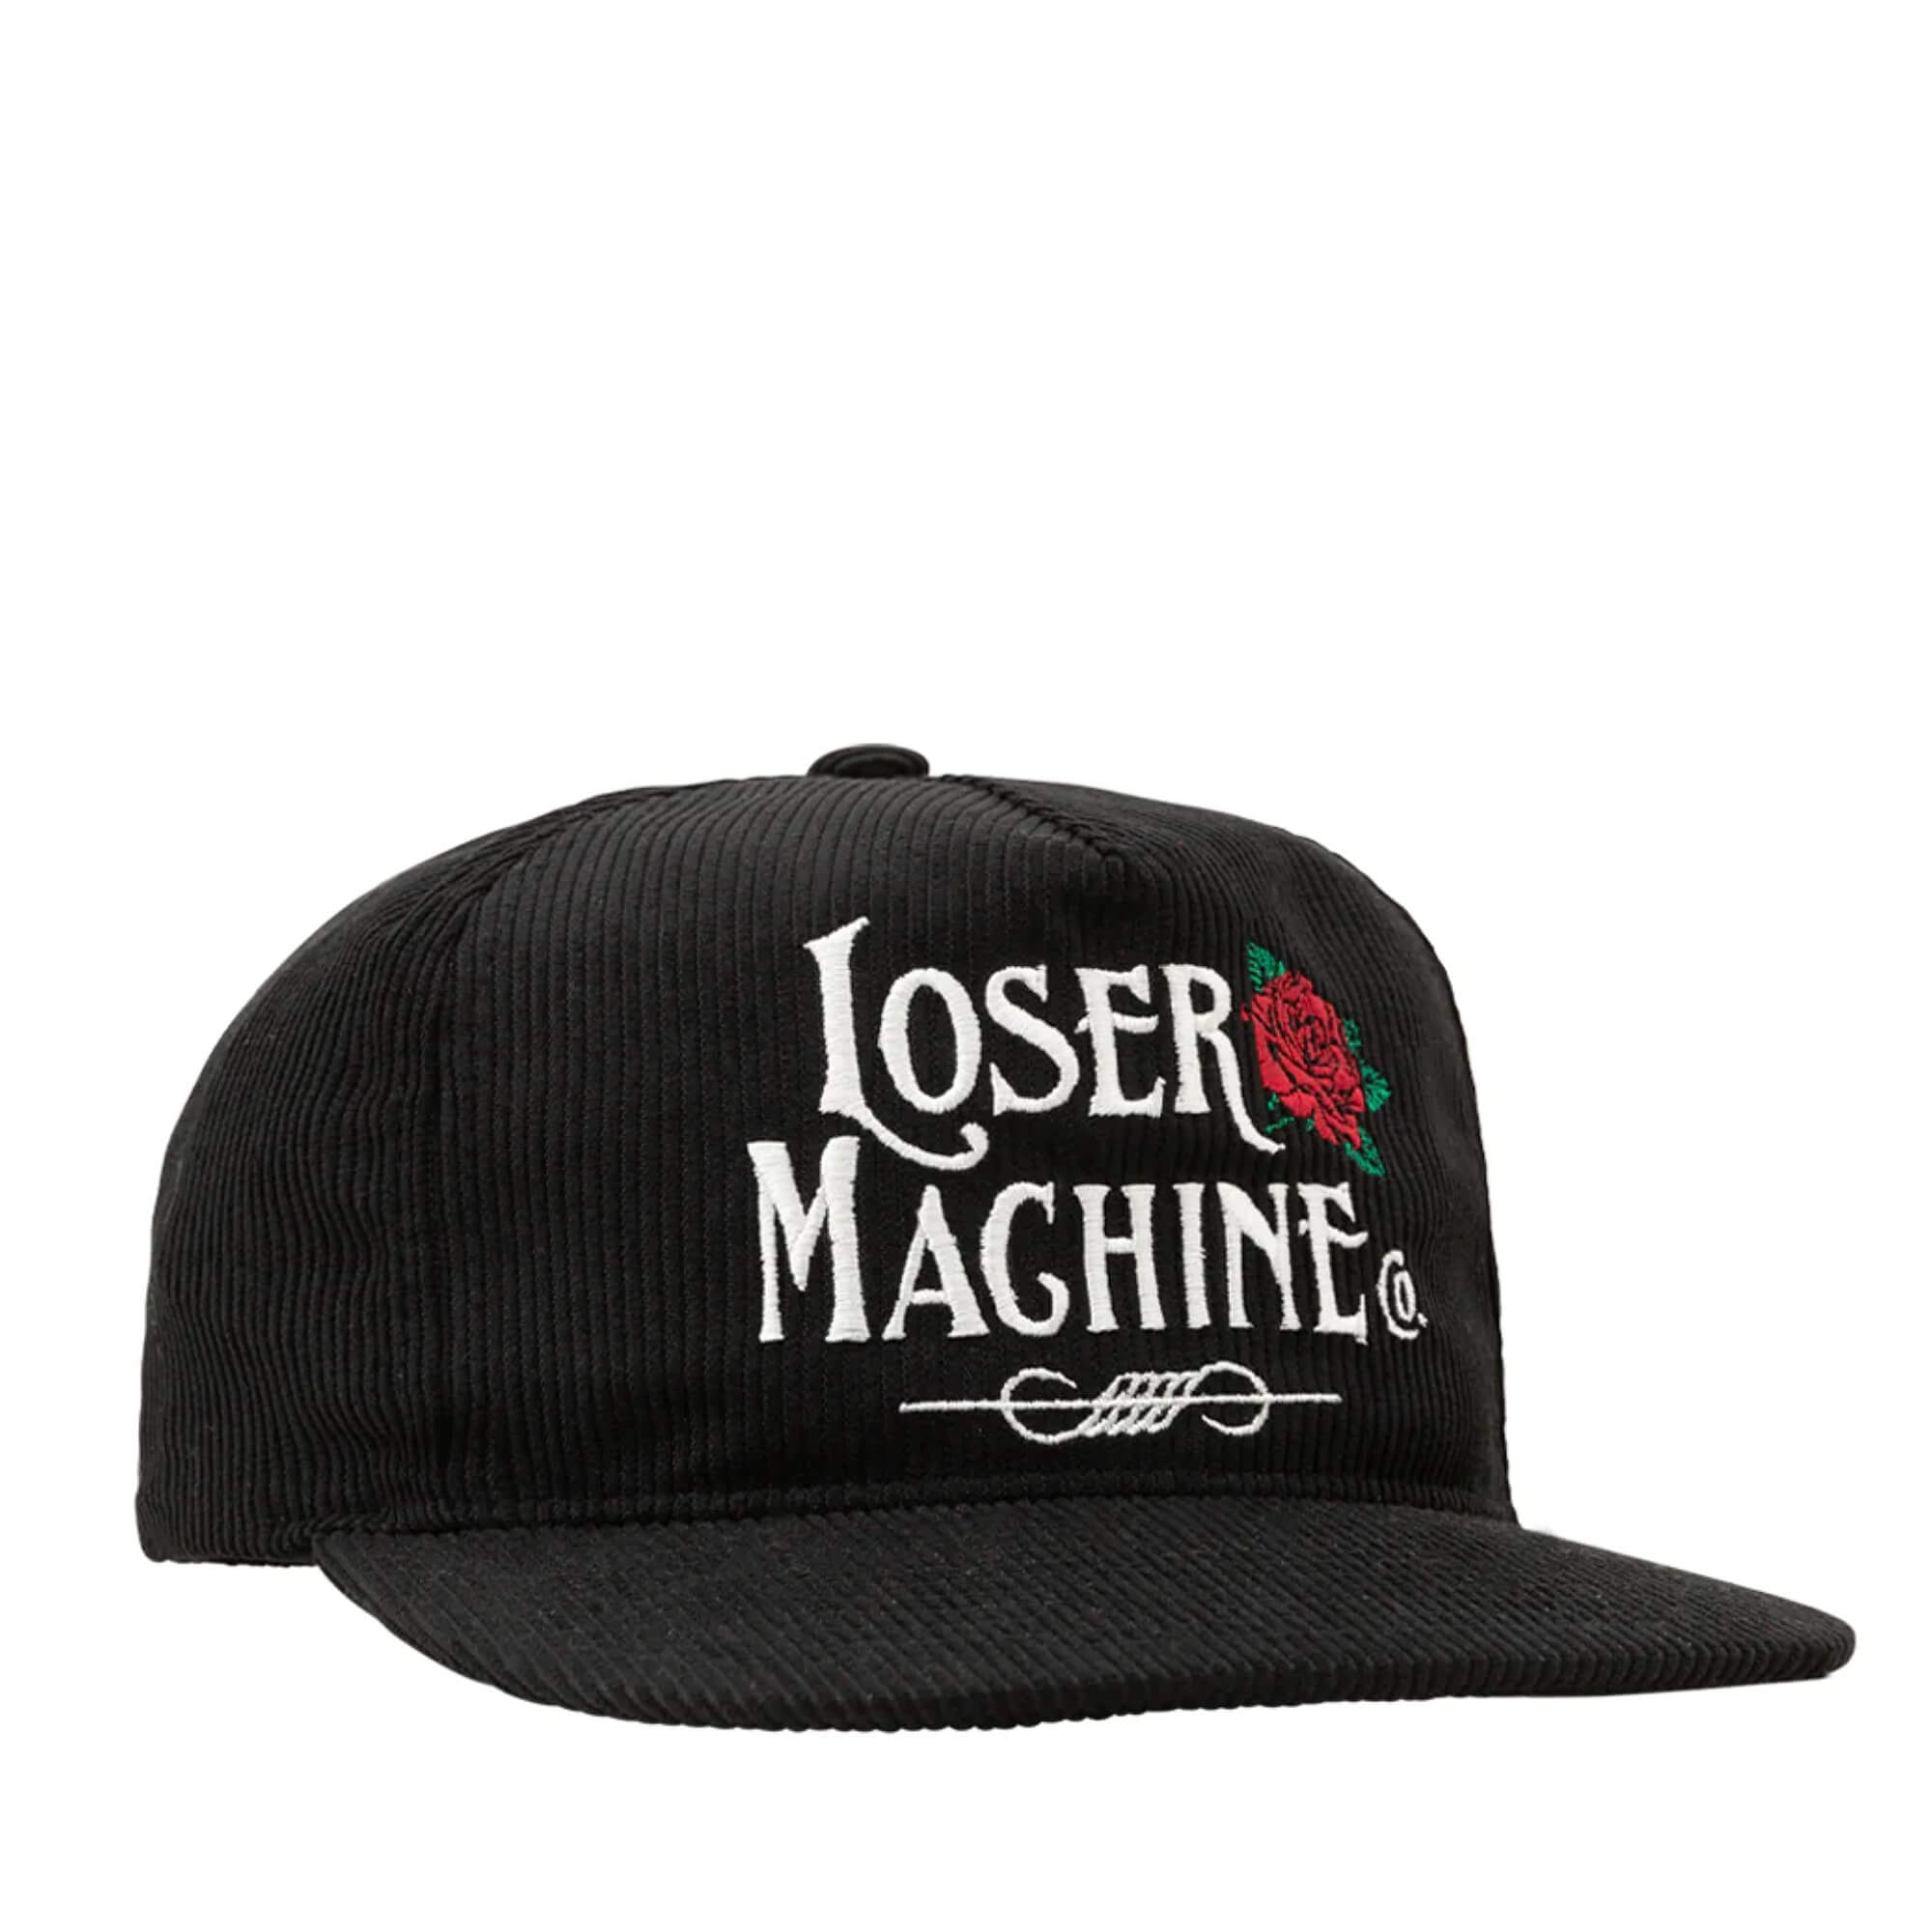 Loser Machine Endless Snapback Cap Black